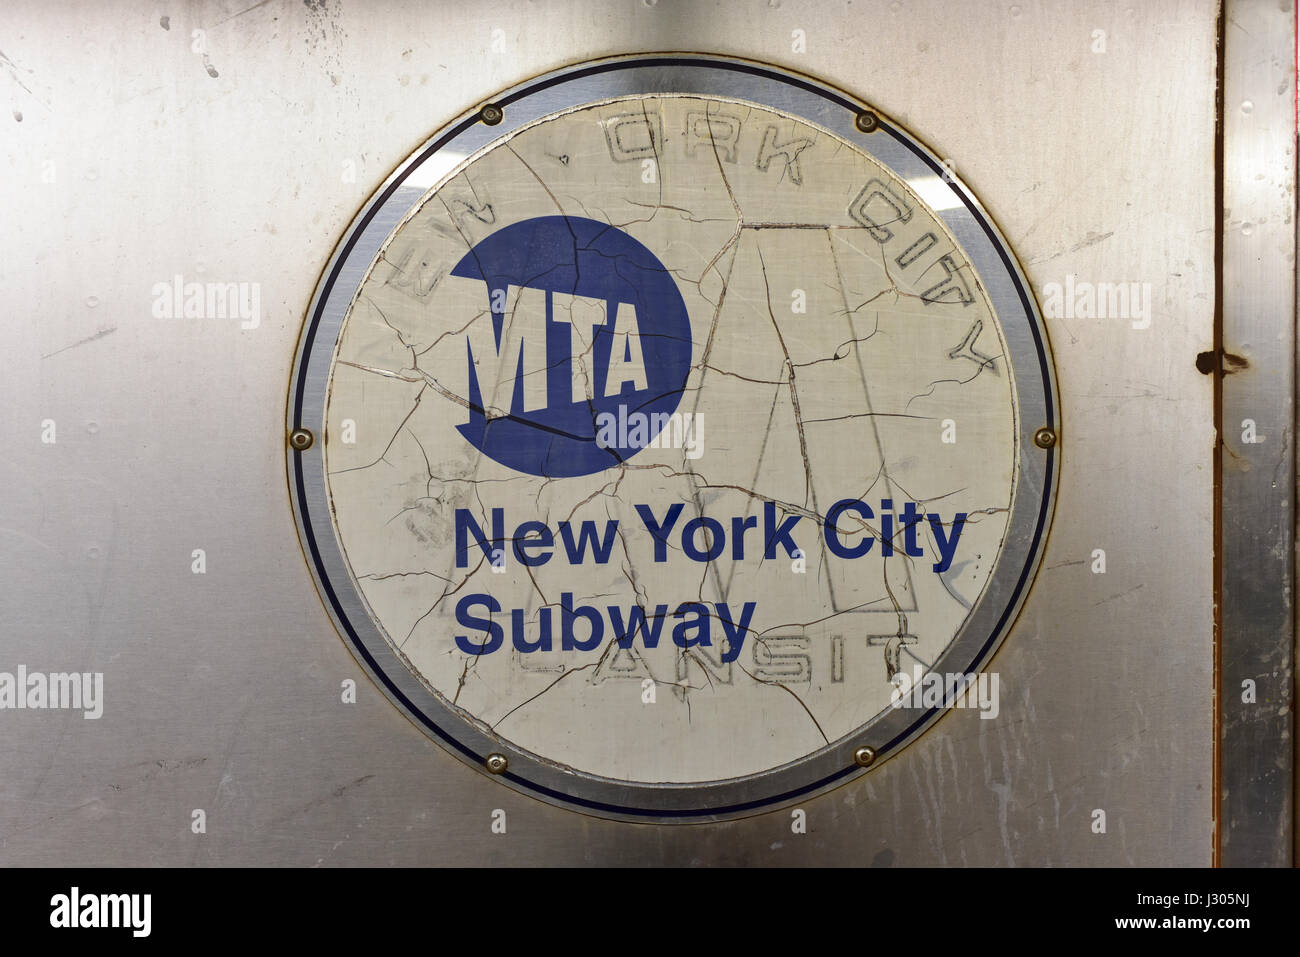 Brooklyn, New York - March 24, 2017: MTA New York City subway logo on the exterior of a train car. Stock Photo